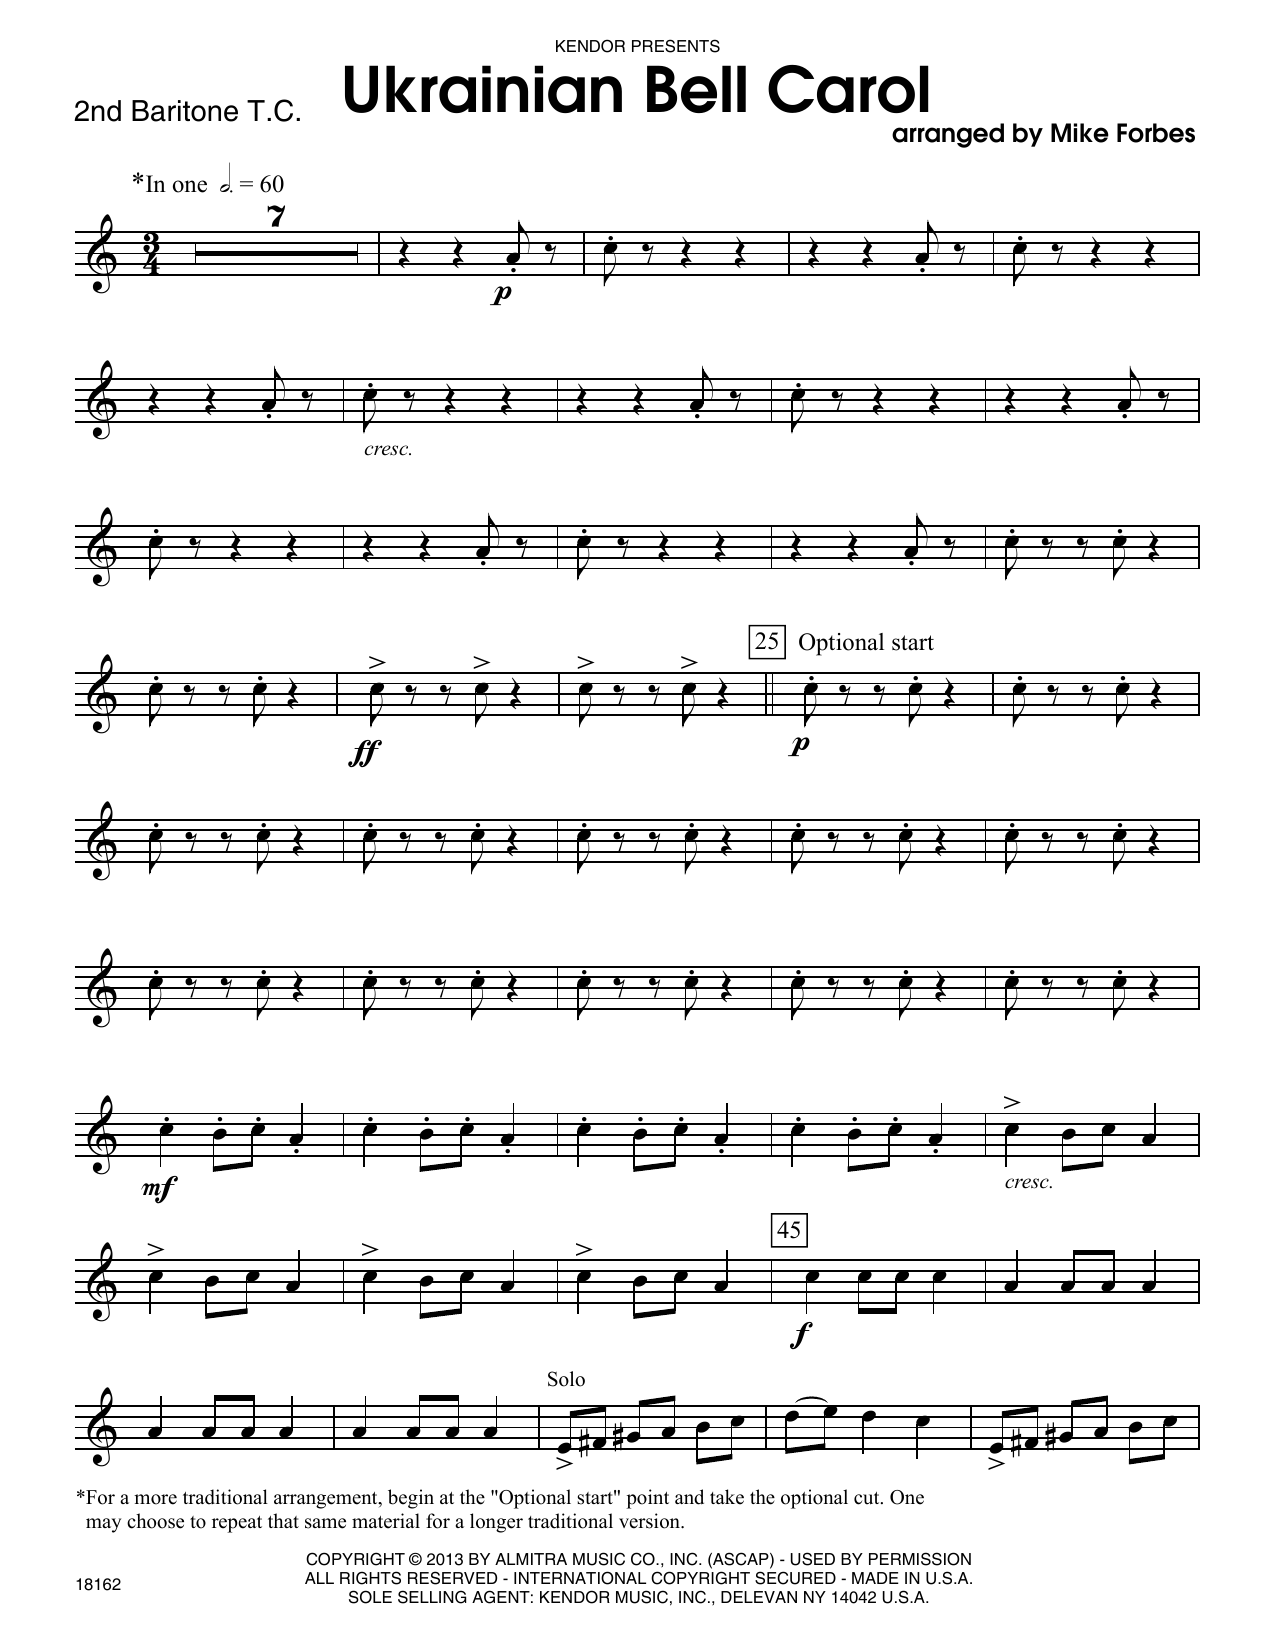 Download Michael Forbes Ukrainian Bell Carol - 2nd Baritone T.C Sheet Music